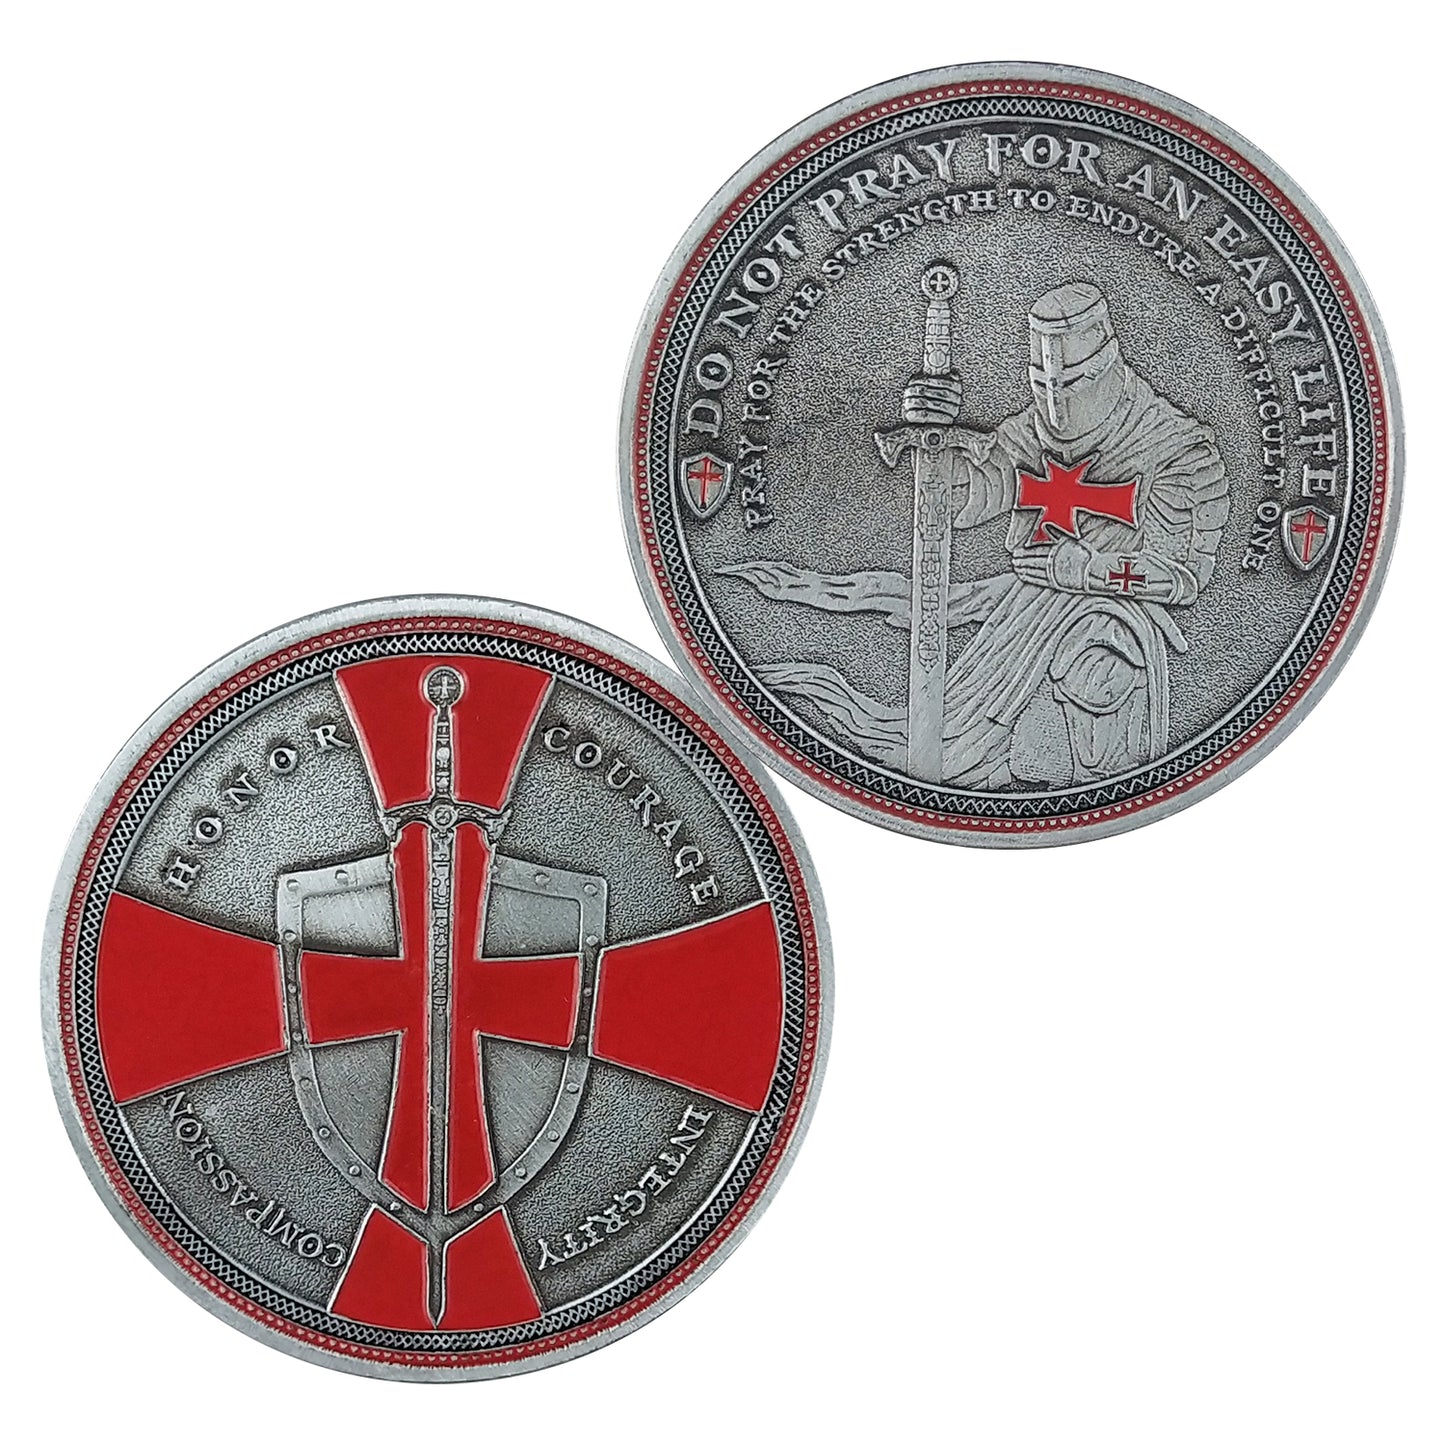 5 Pcs Knight Templar Crusader Life Creed Token Challenge Coin Gift Set